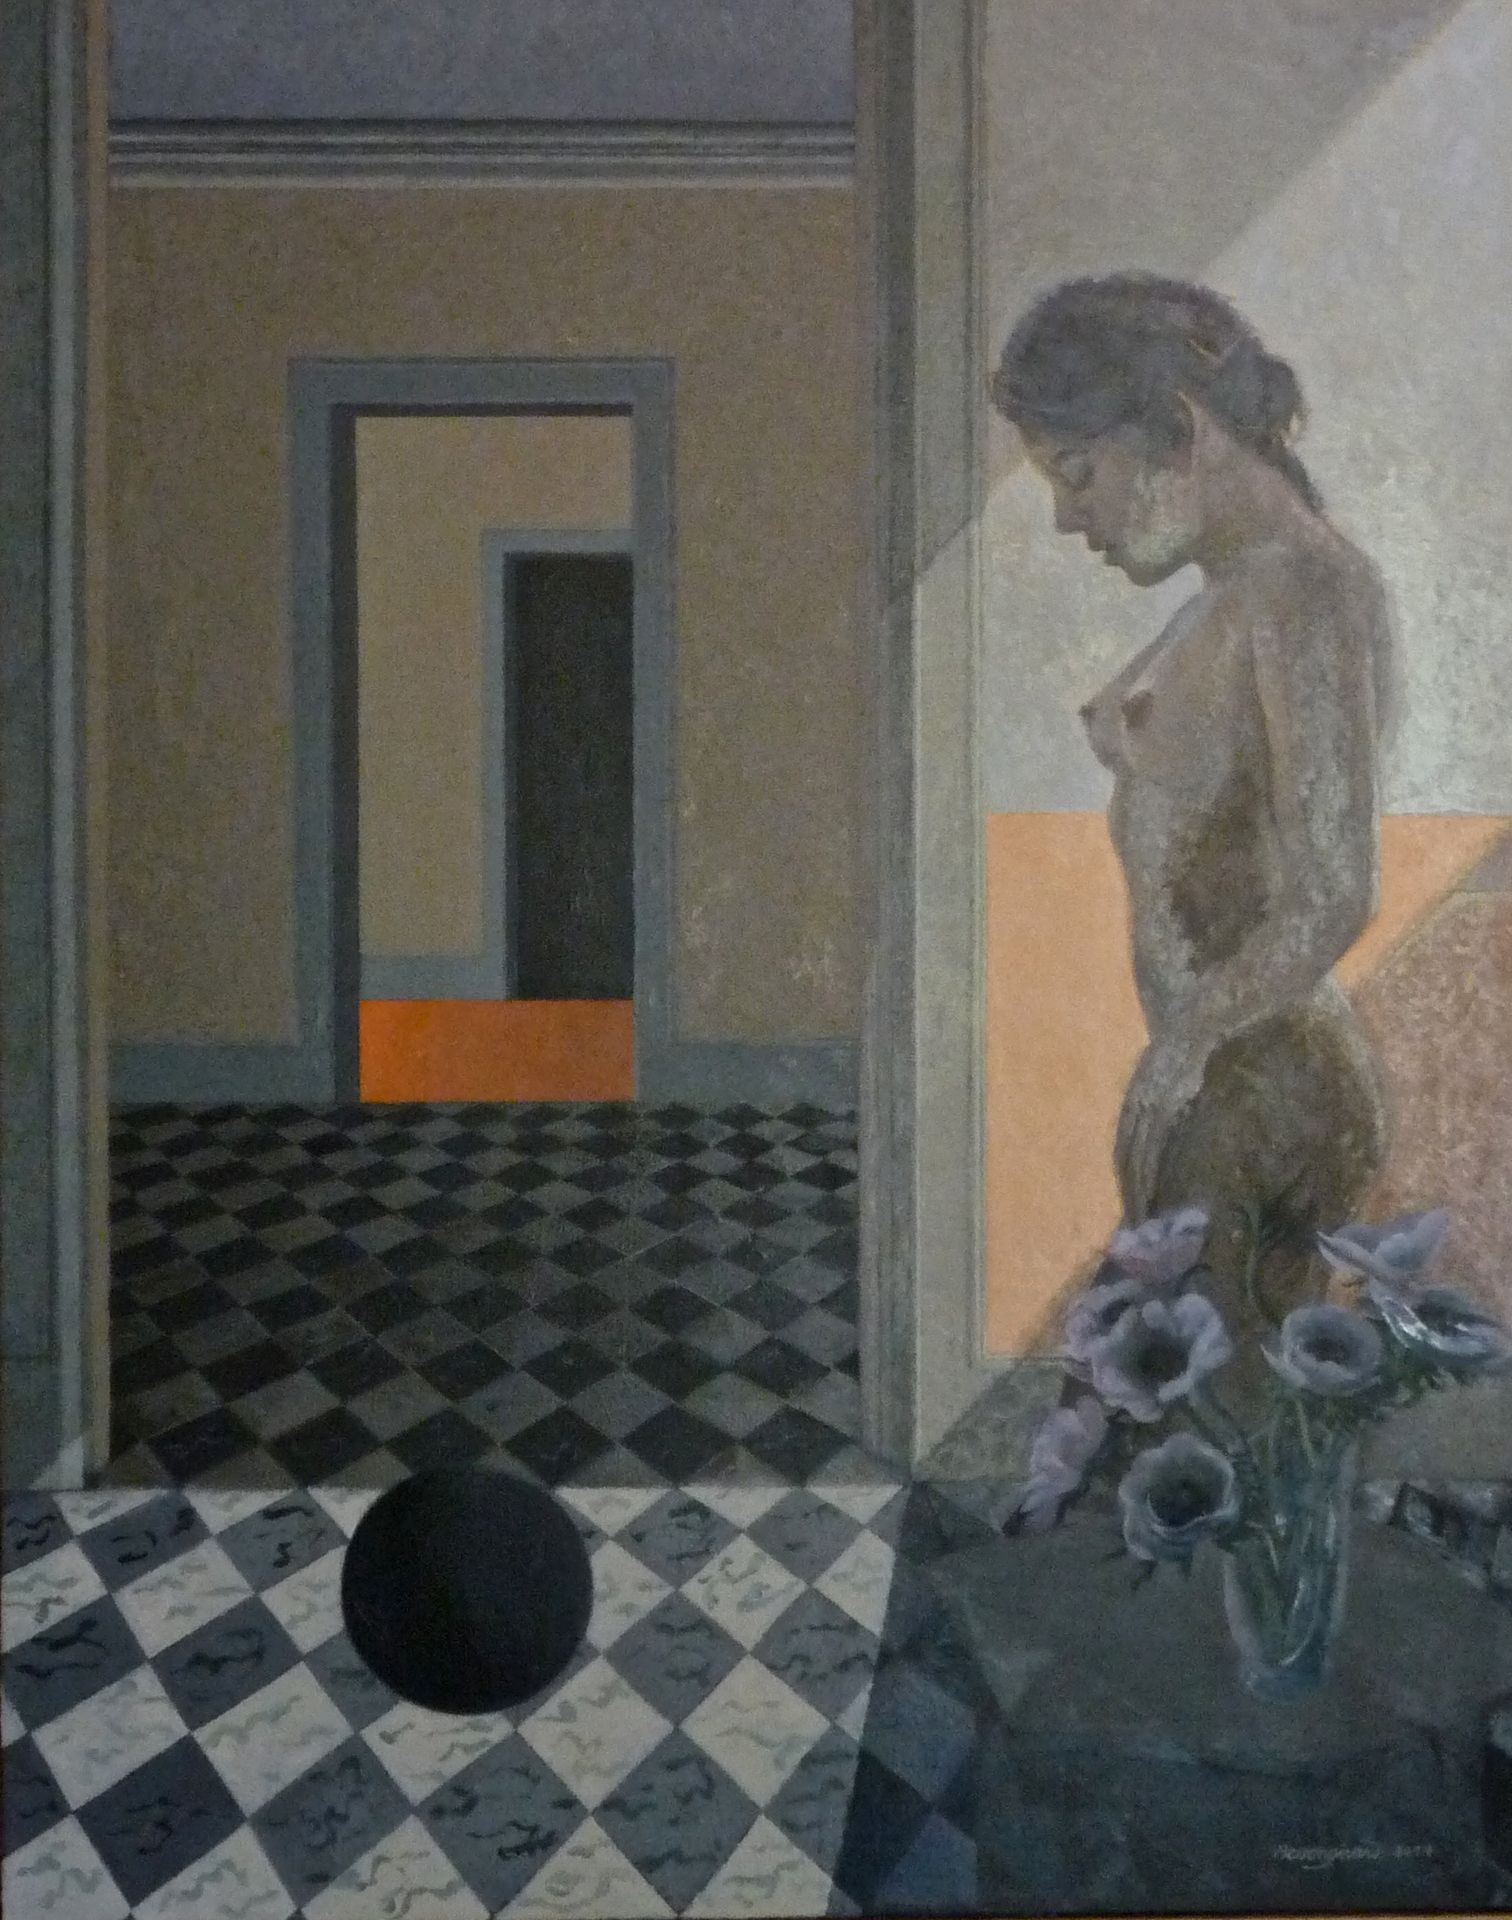 Null 让-克劳德-贝松-吉拉尔 (1938-2021)

安吉莉克和龙，2017

布面油画，右下方有签名和日期

92 x 73 cm